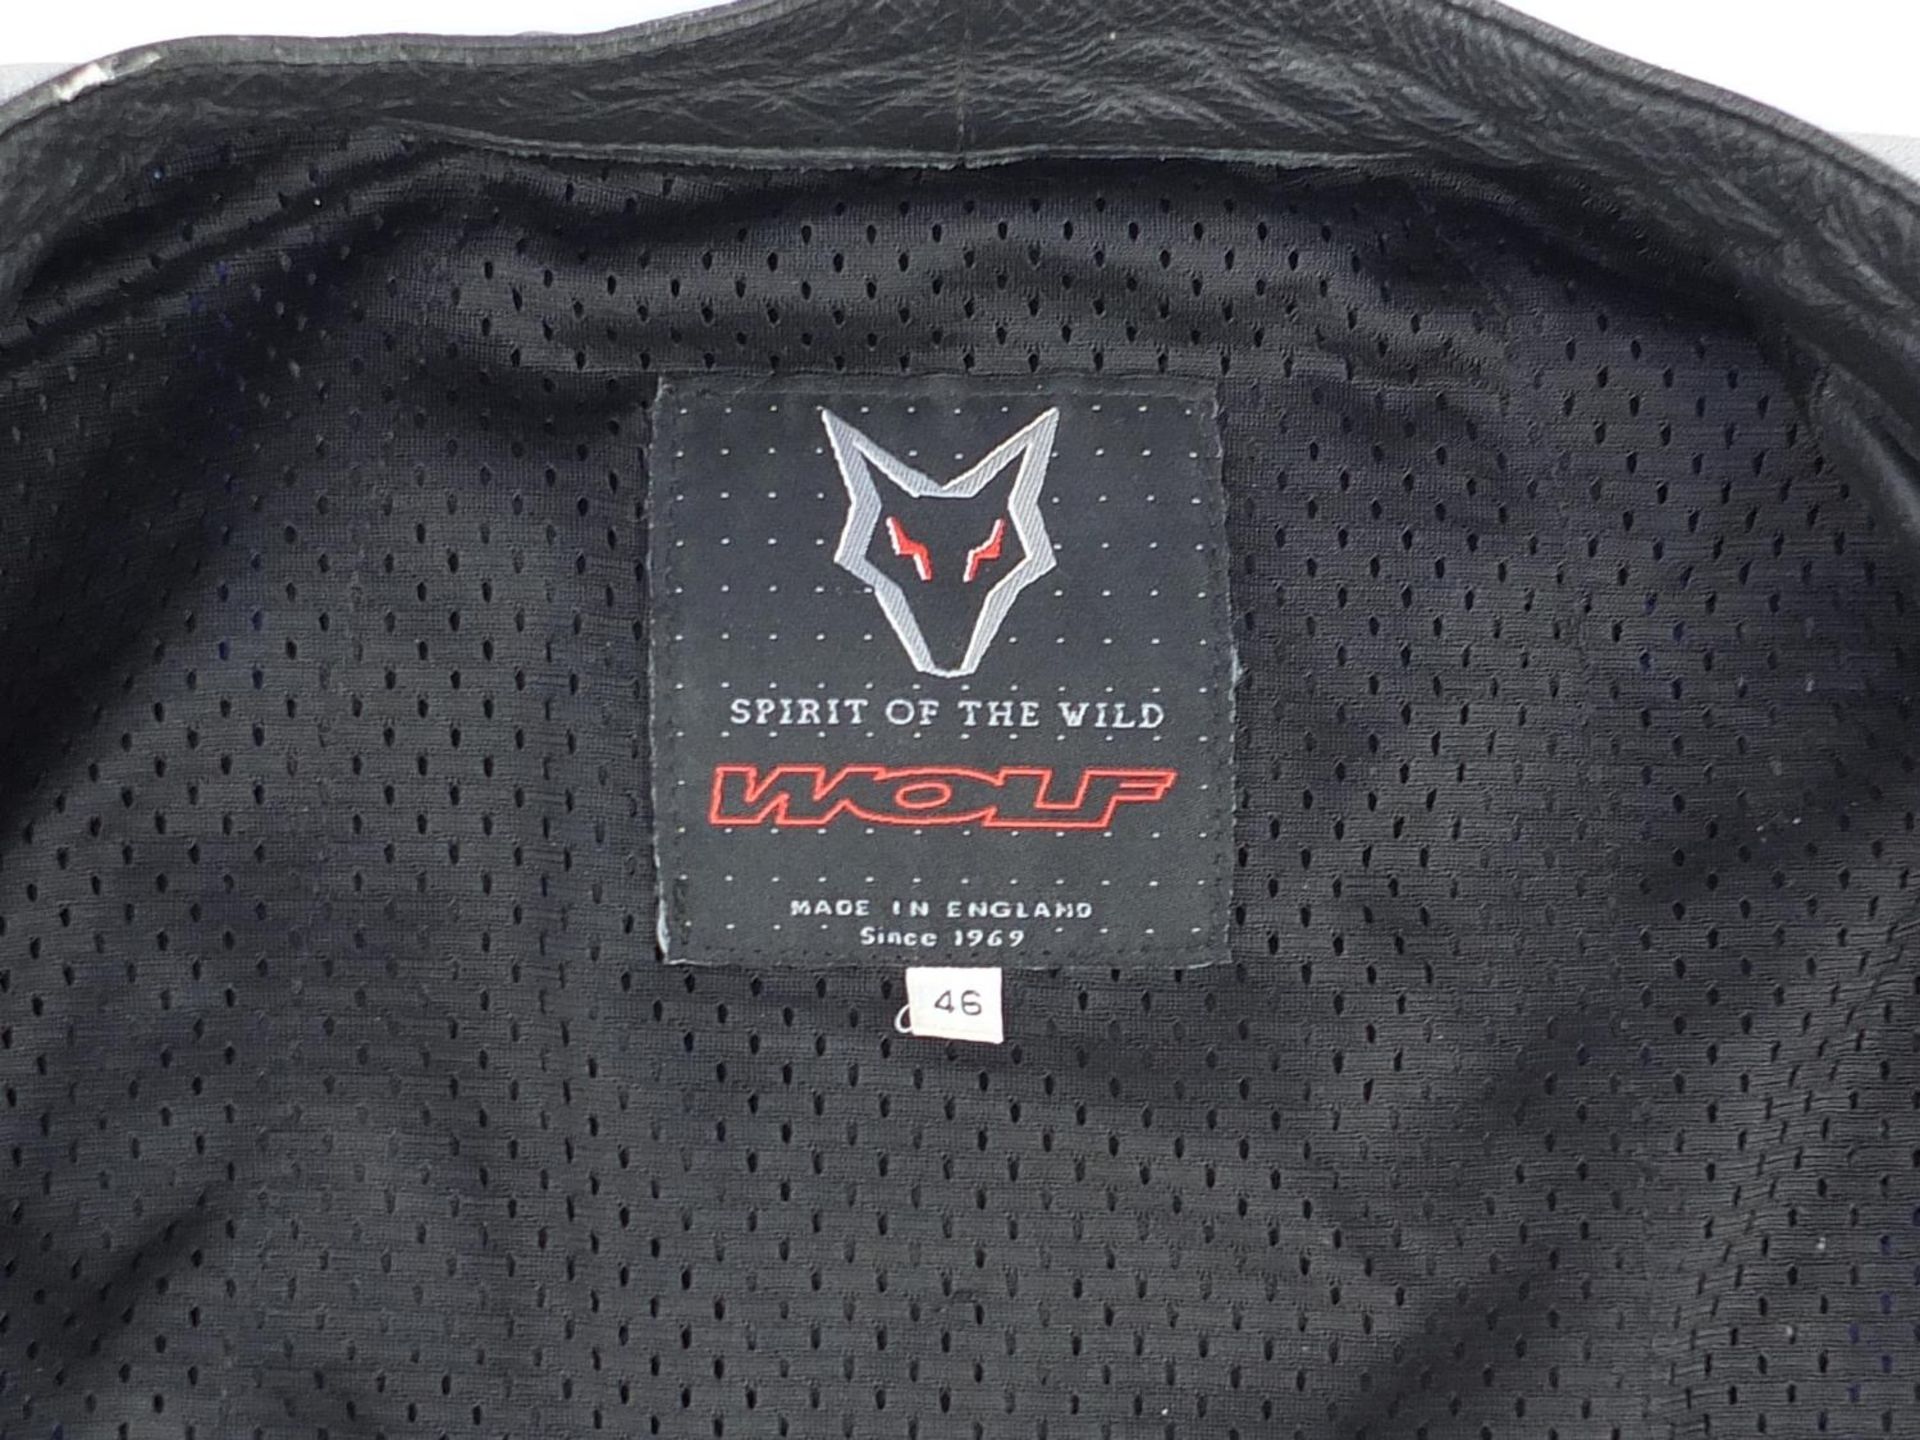 Wolf, Spirit of the Wild leather motorcycle jacket, size 46 - Image 3 of 4